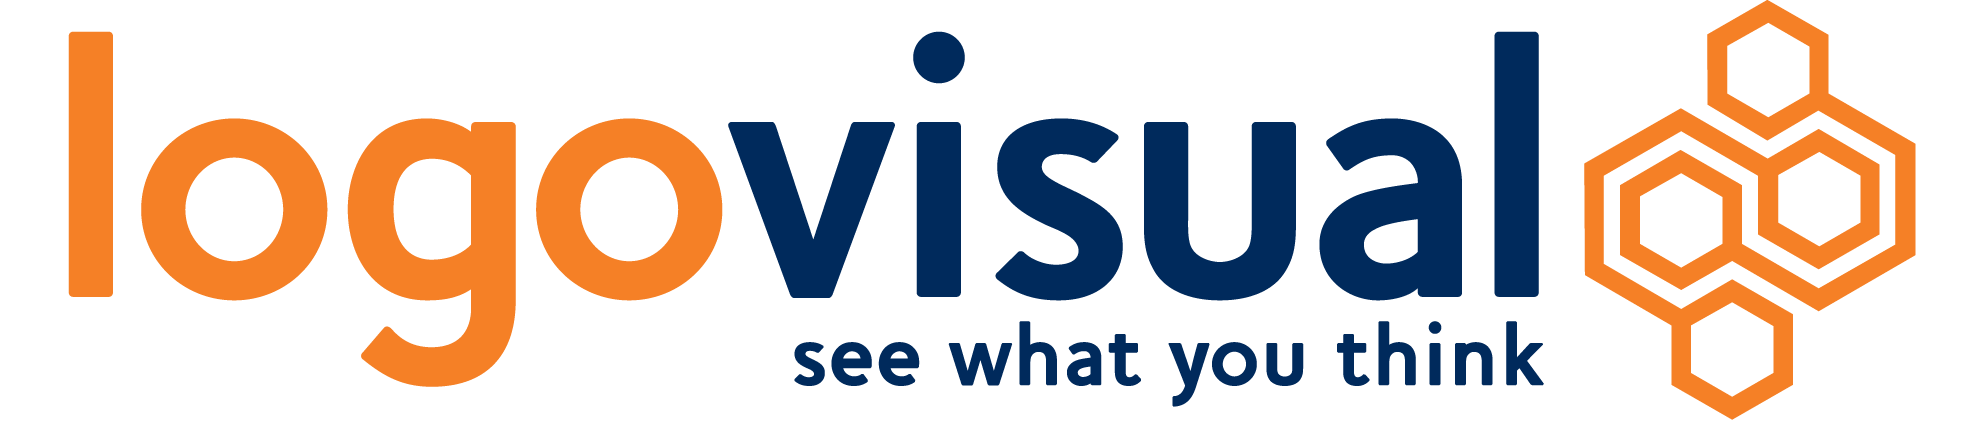 Logovisual